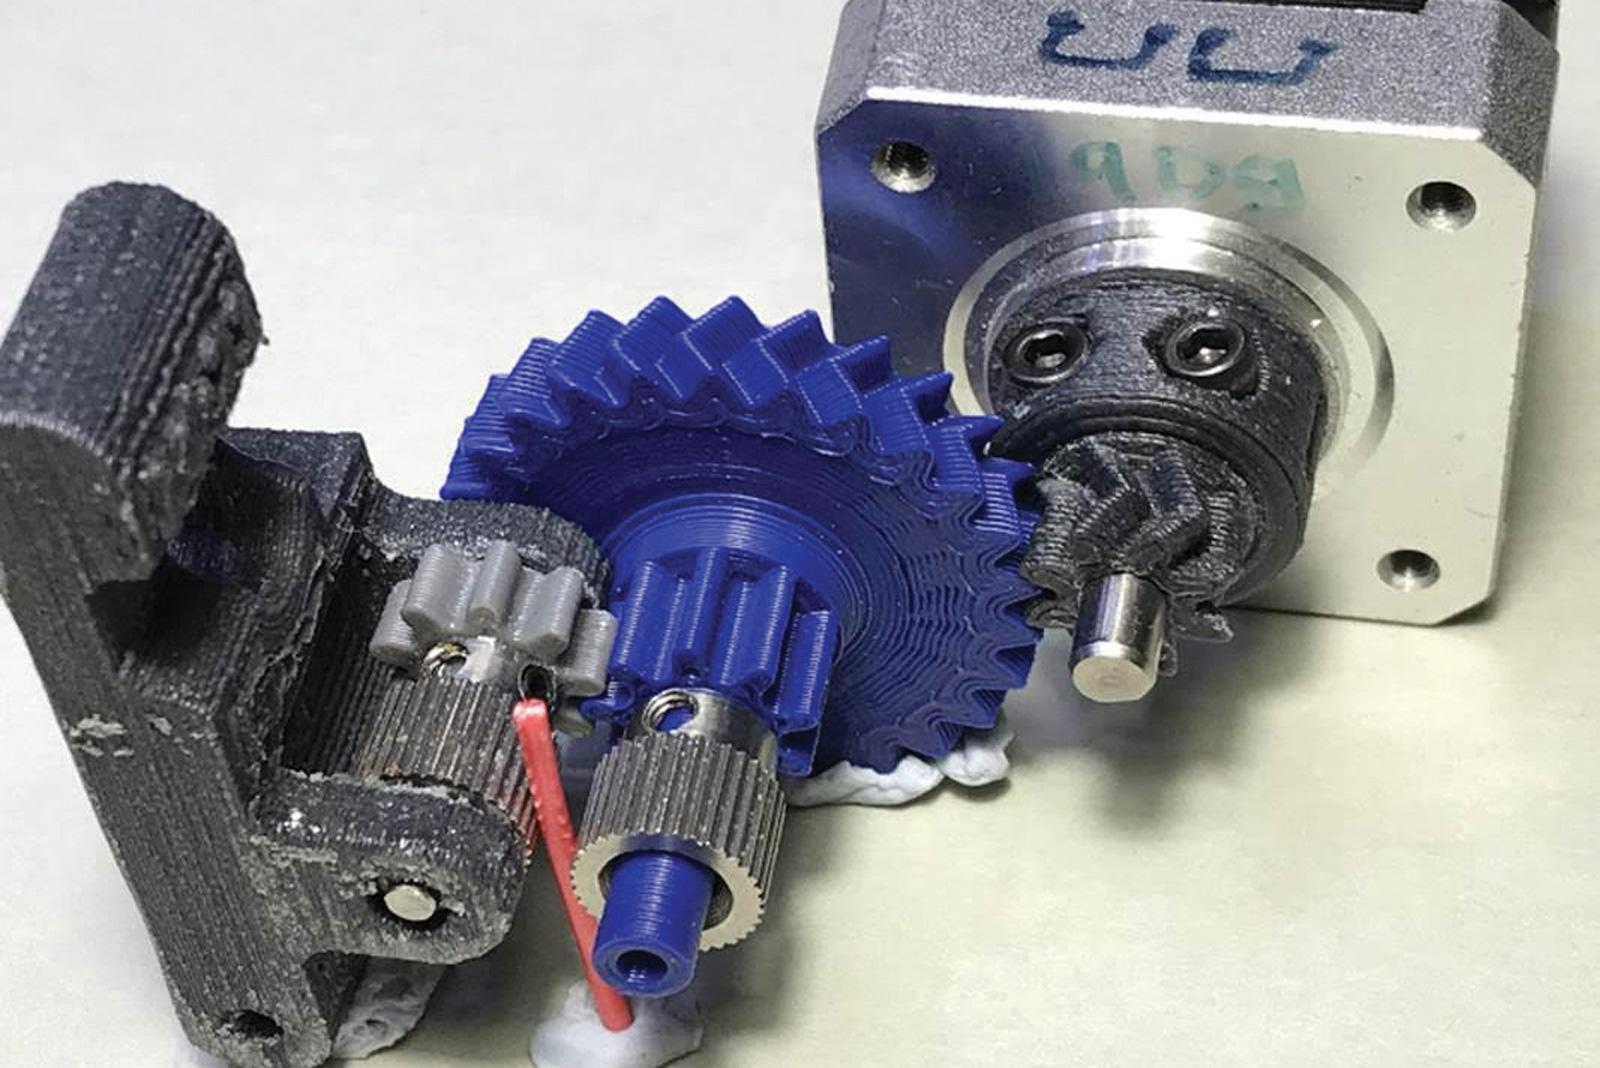 3D printing gears for an Ashford wool carder 